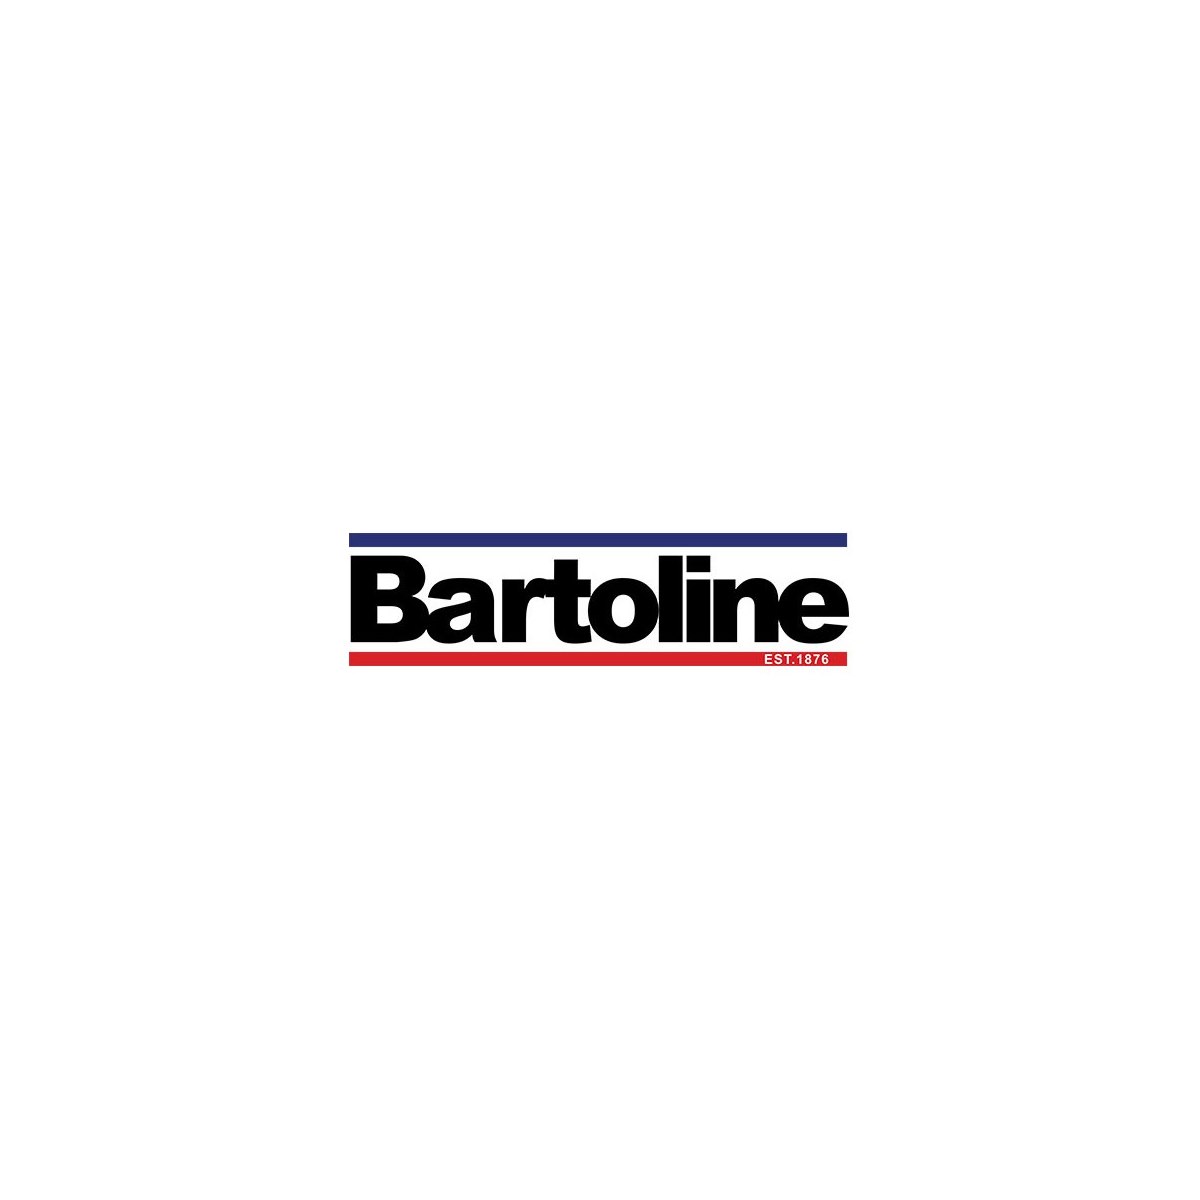 Bartoline Products